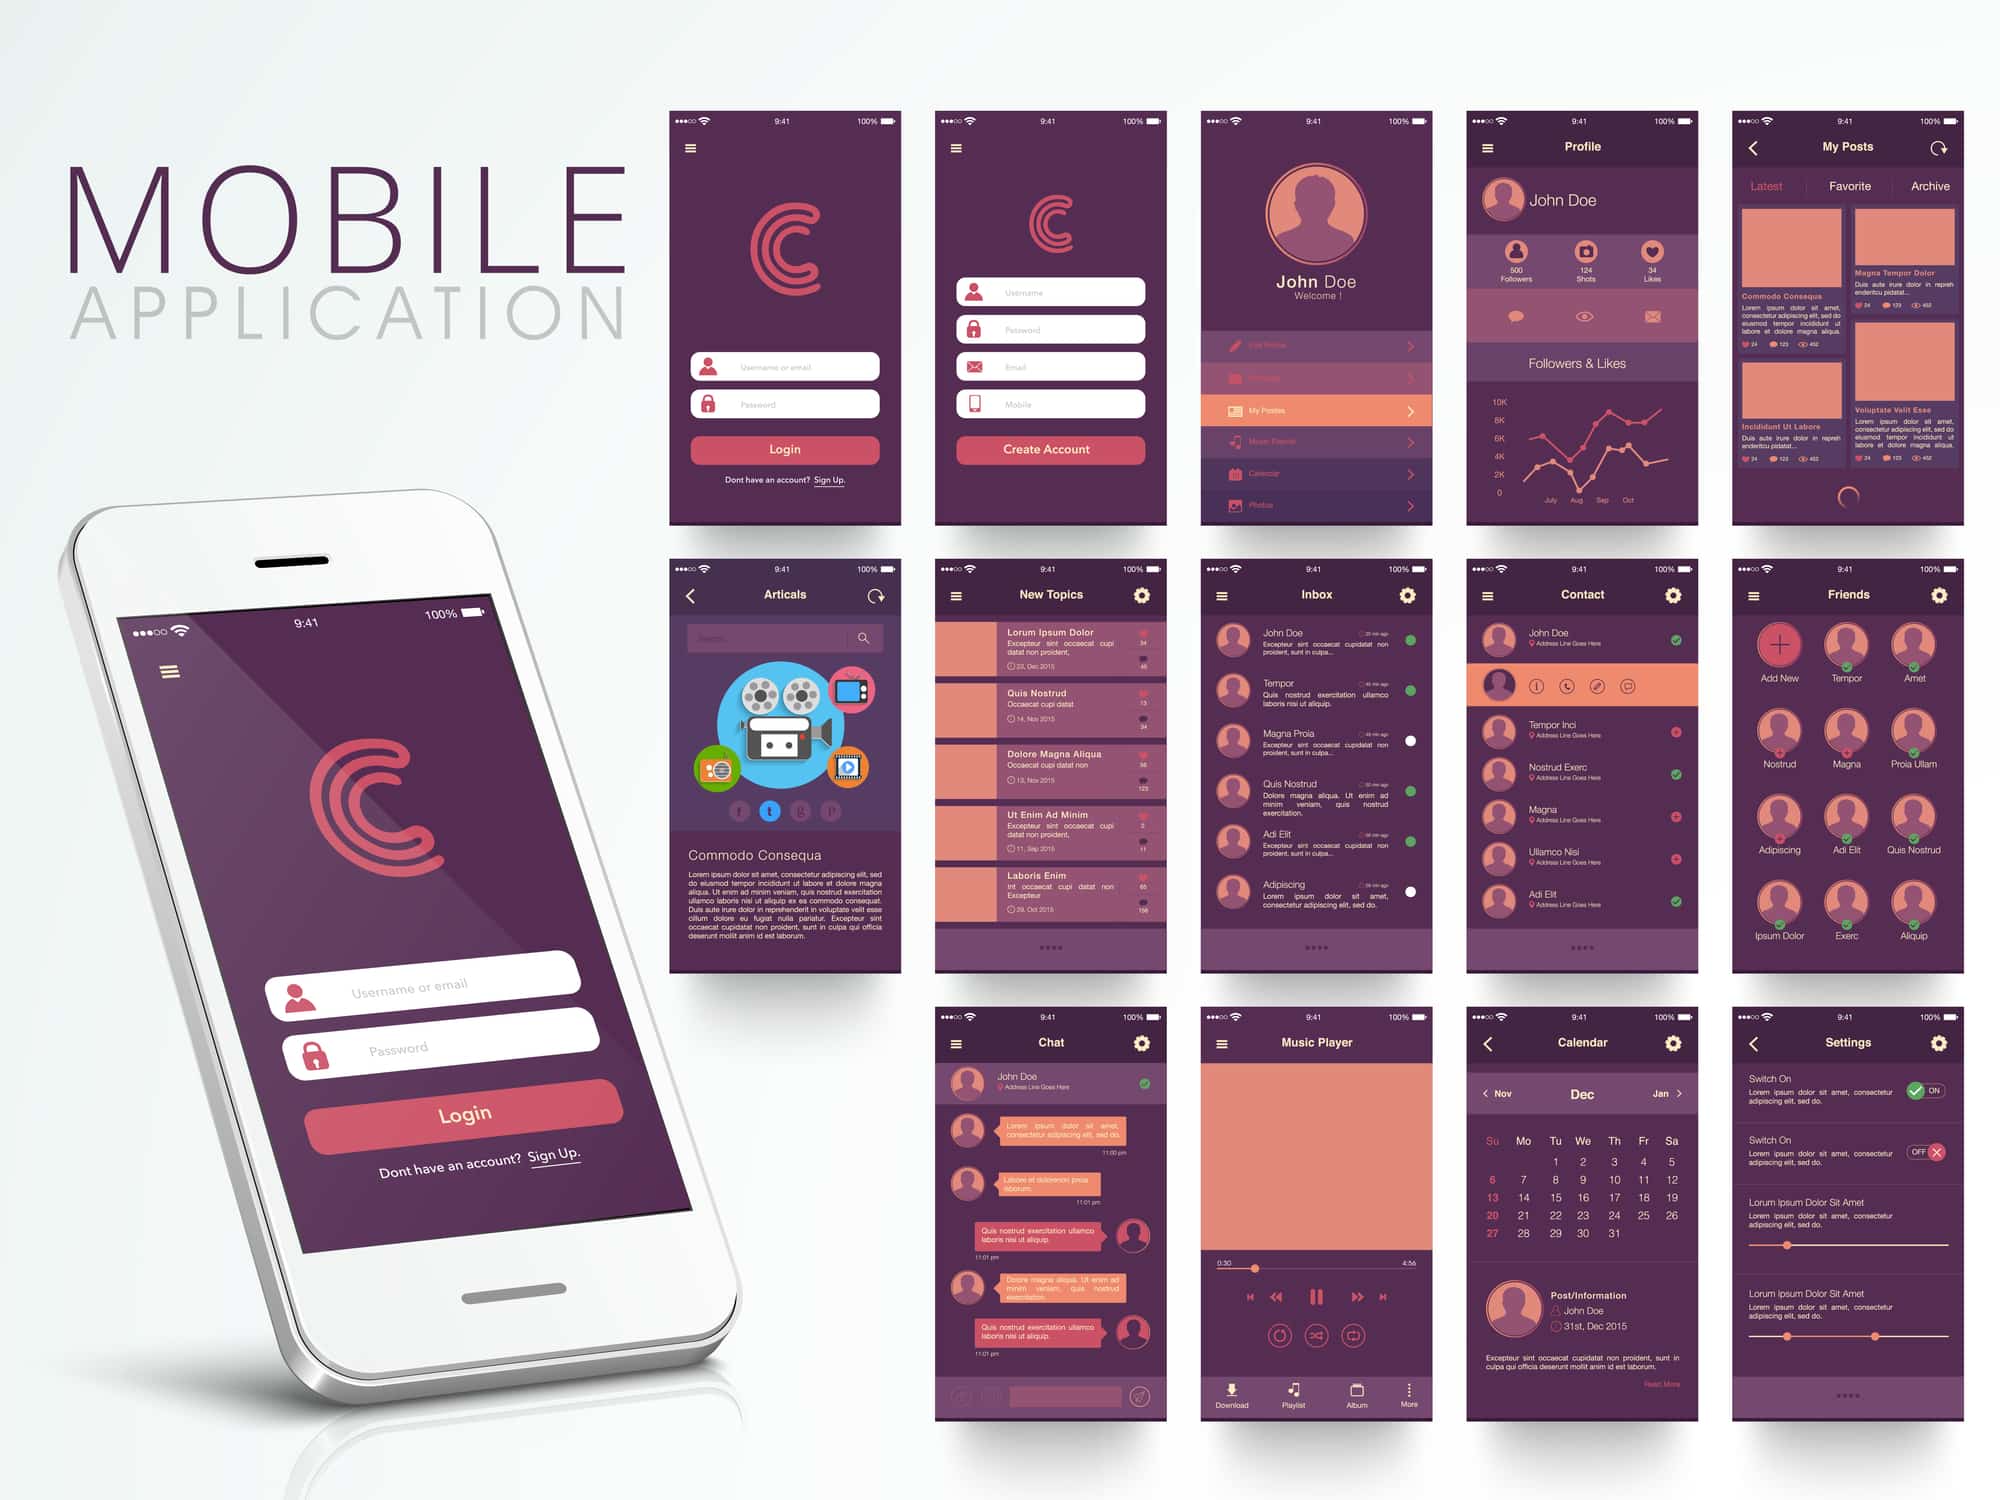 Mock ups of mobile application screens